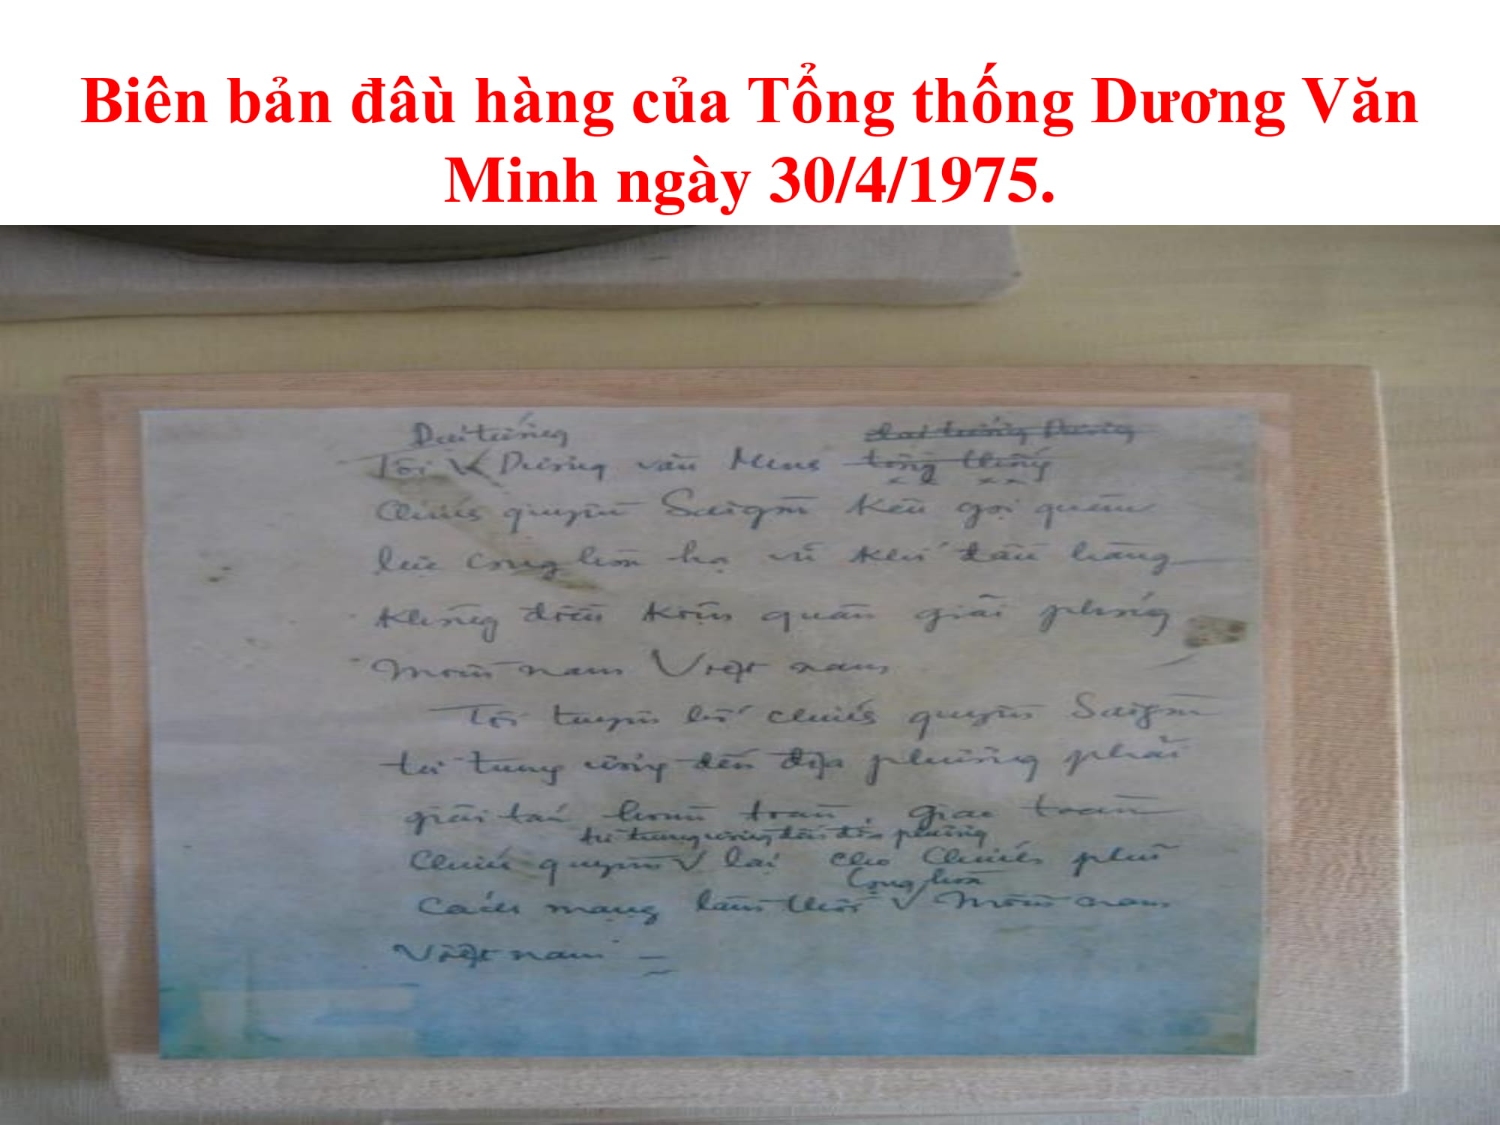 Chuyen de Ki niem 43 nam Thong nhat dat nuoc 13